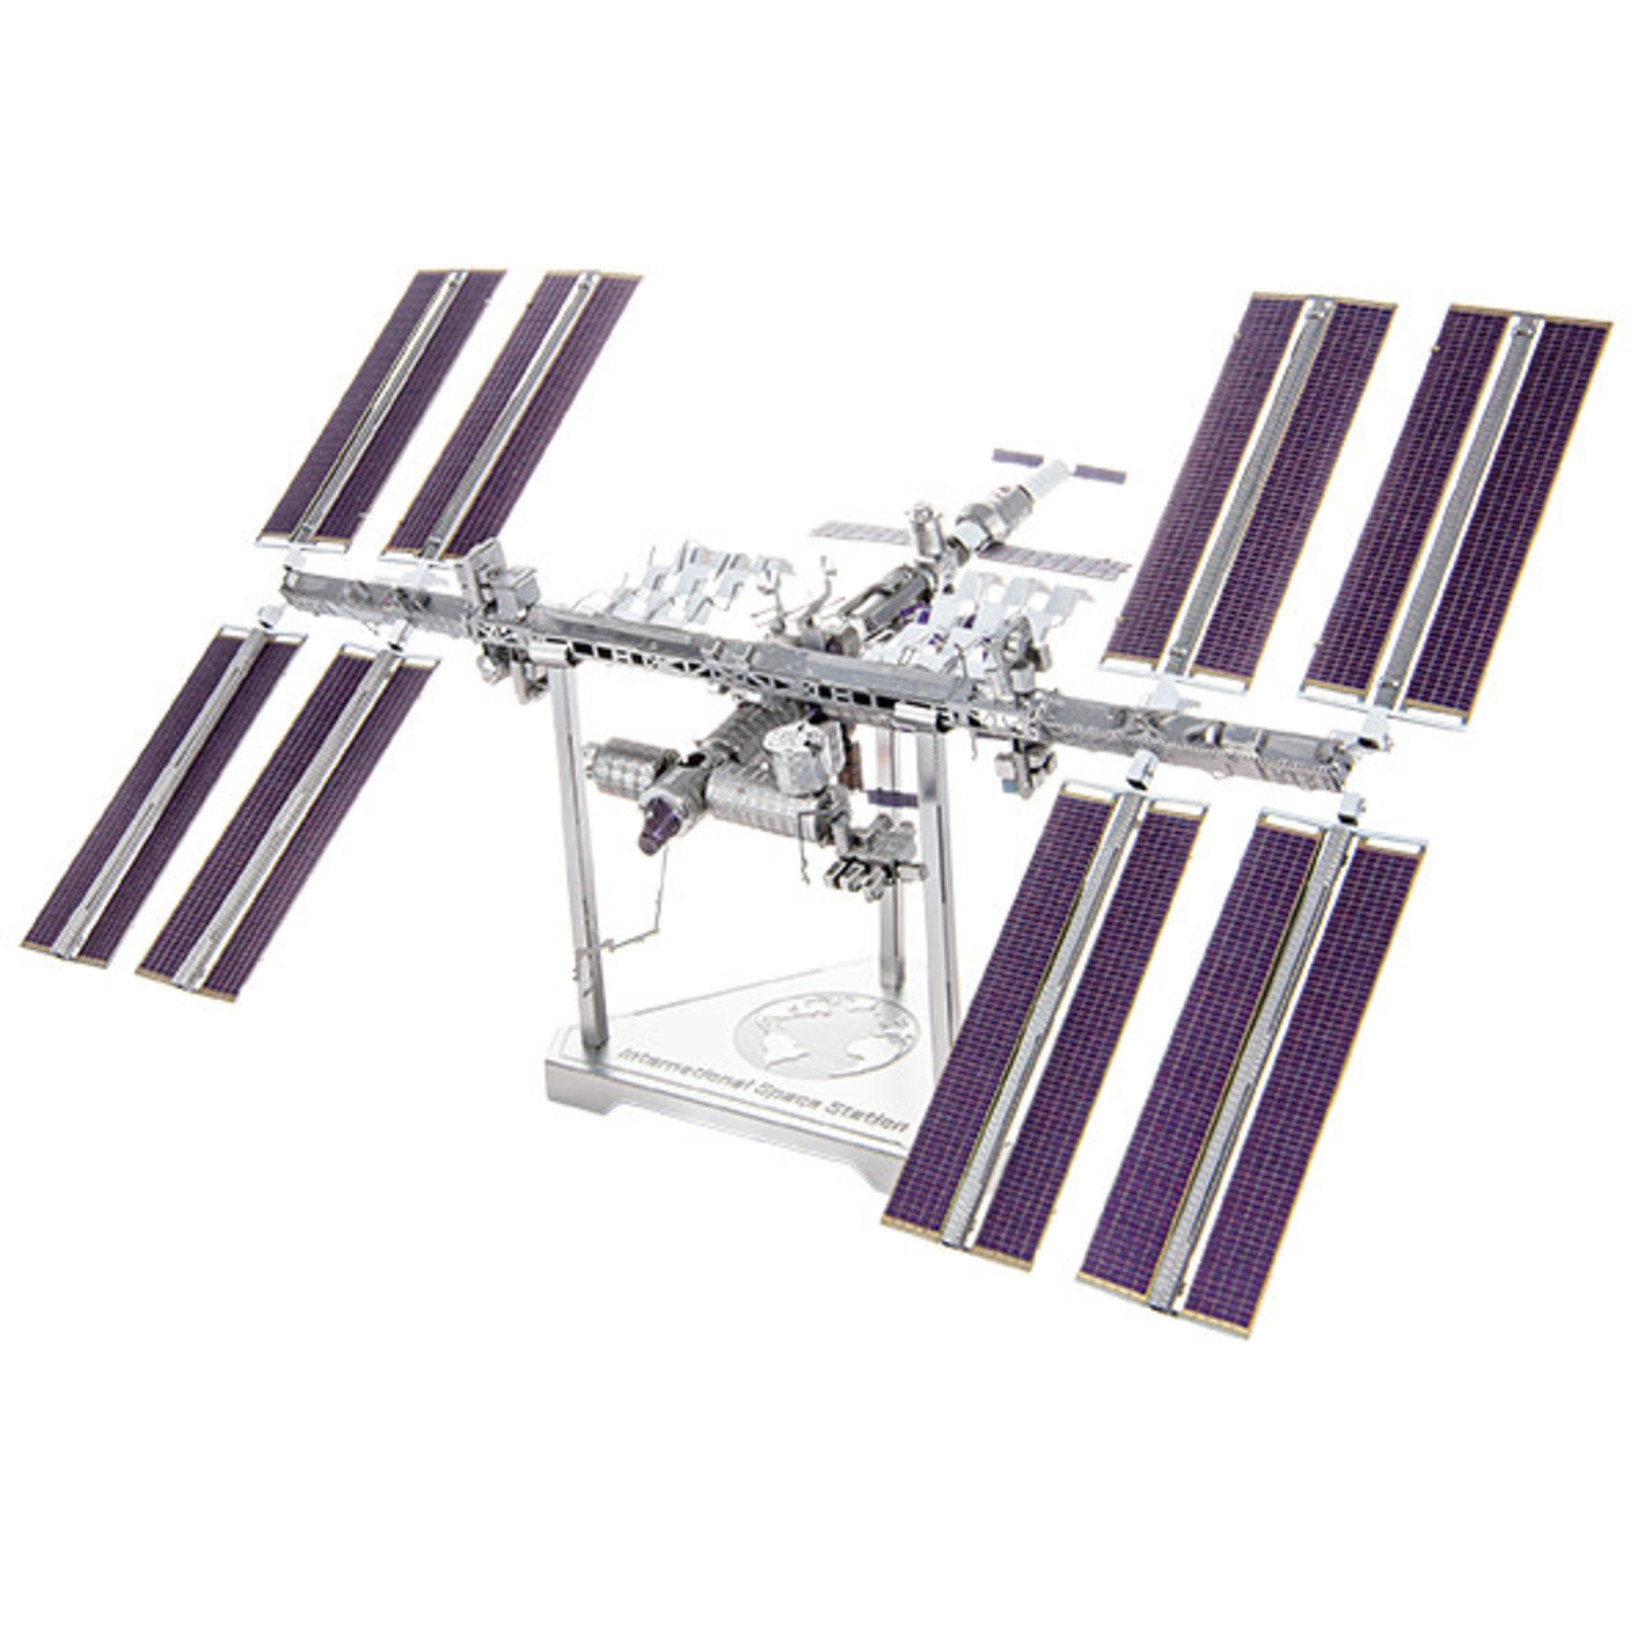 Metal Earth ICX140 International Space Station